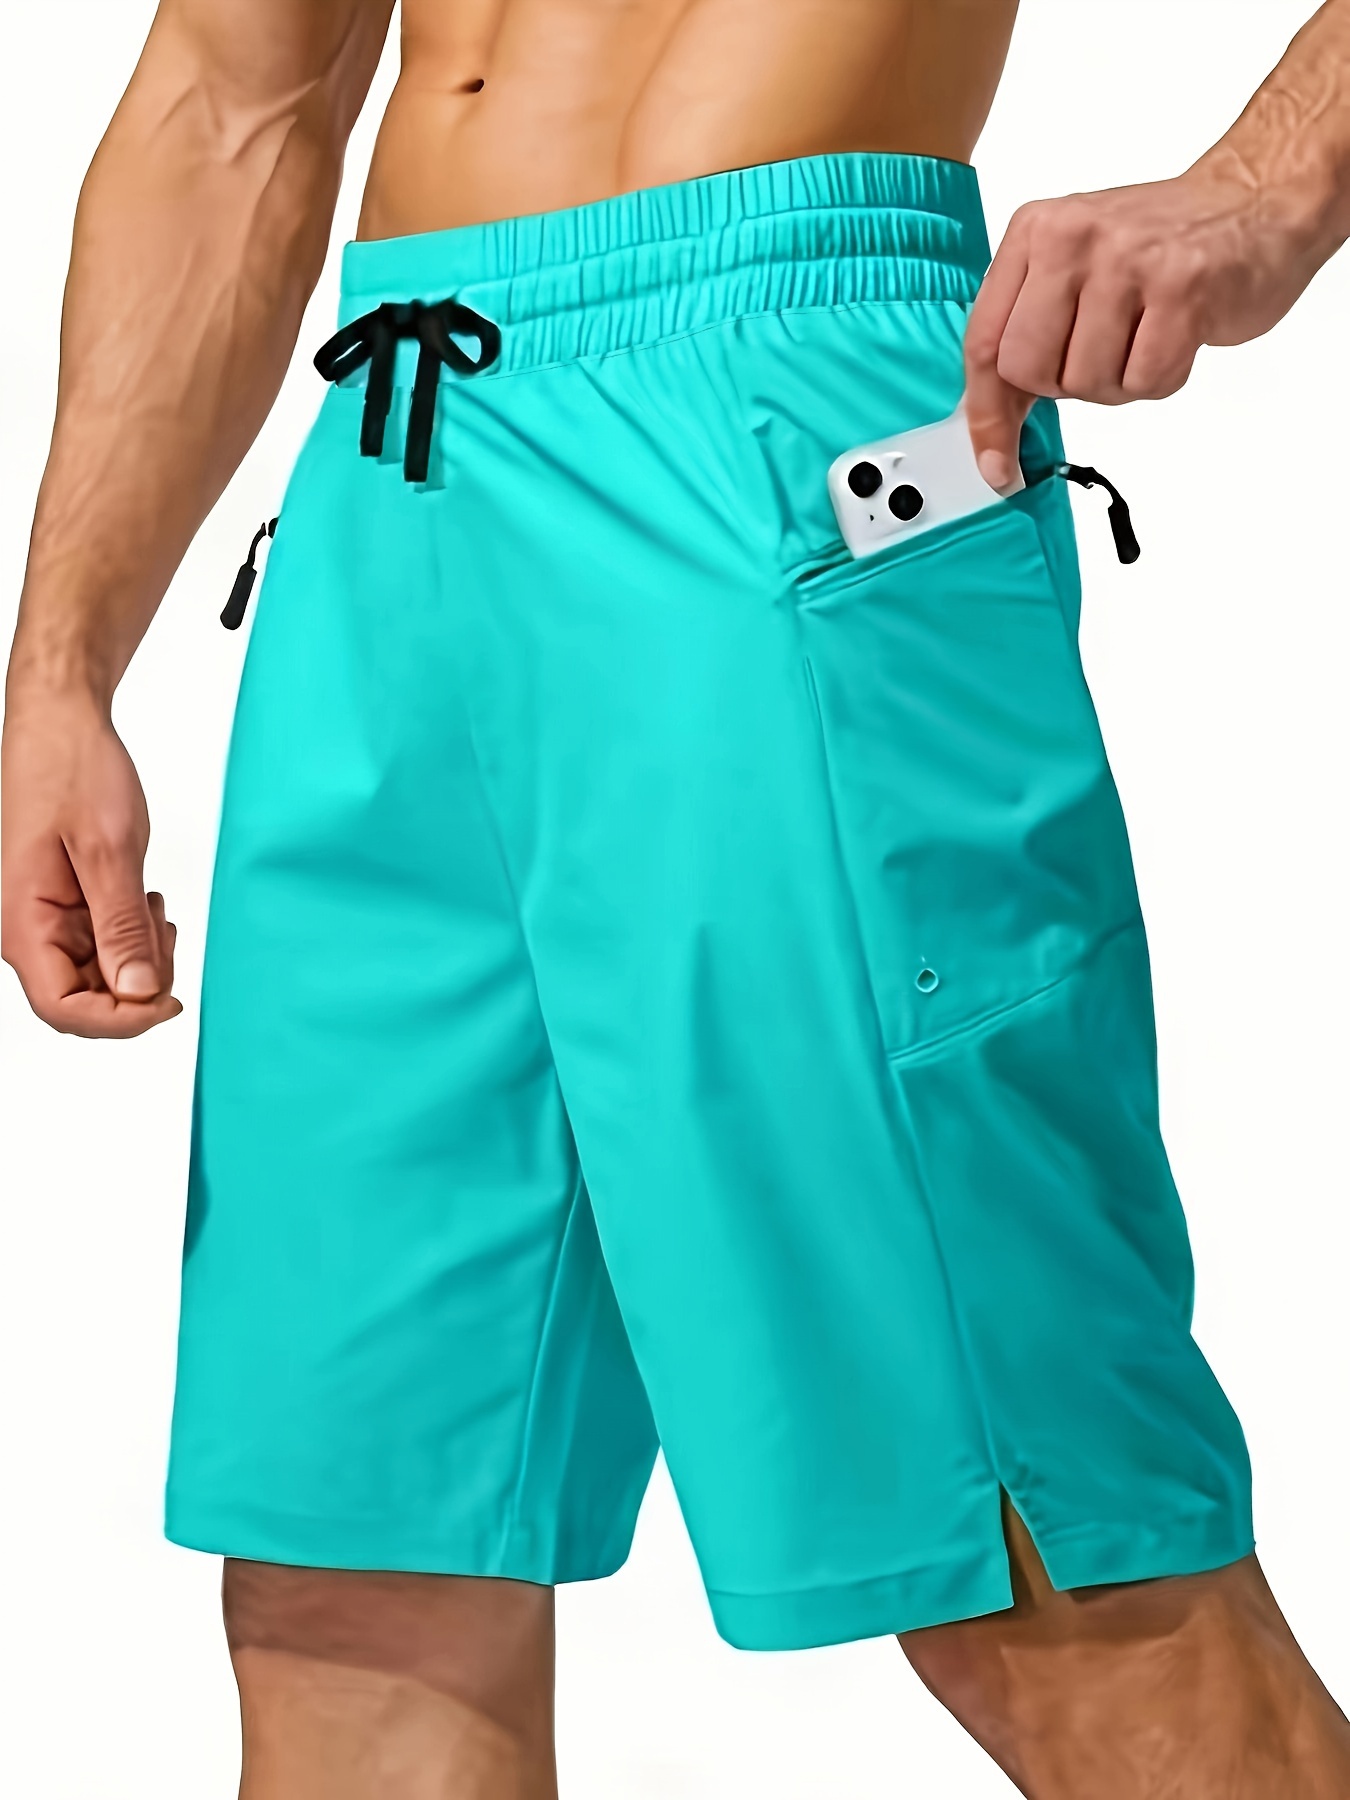 Men's Slim Swim Shorts With Zipper Pockets Quick Dry Swimsuit Sports Swim  Trunks